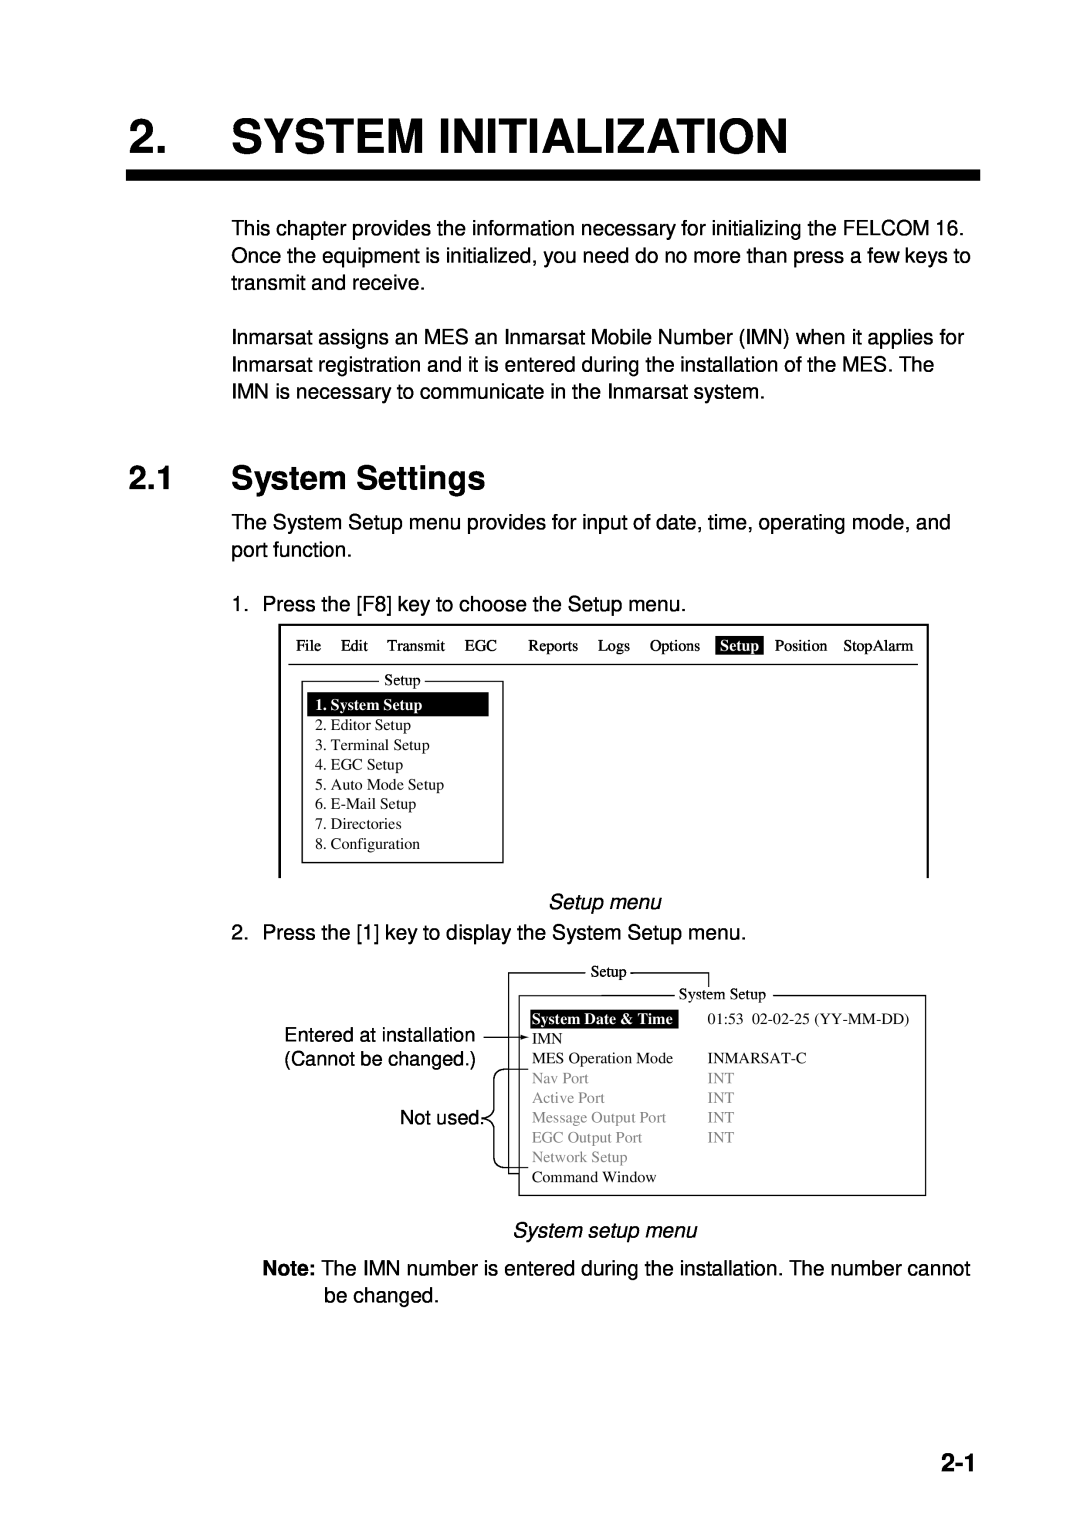 Furuno 16 manual System Initialization, System Settings 